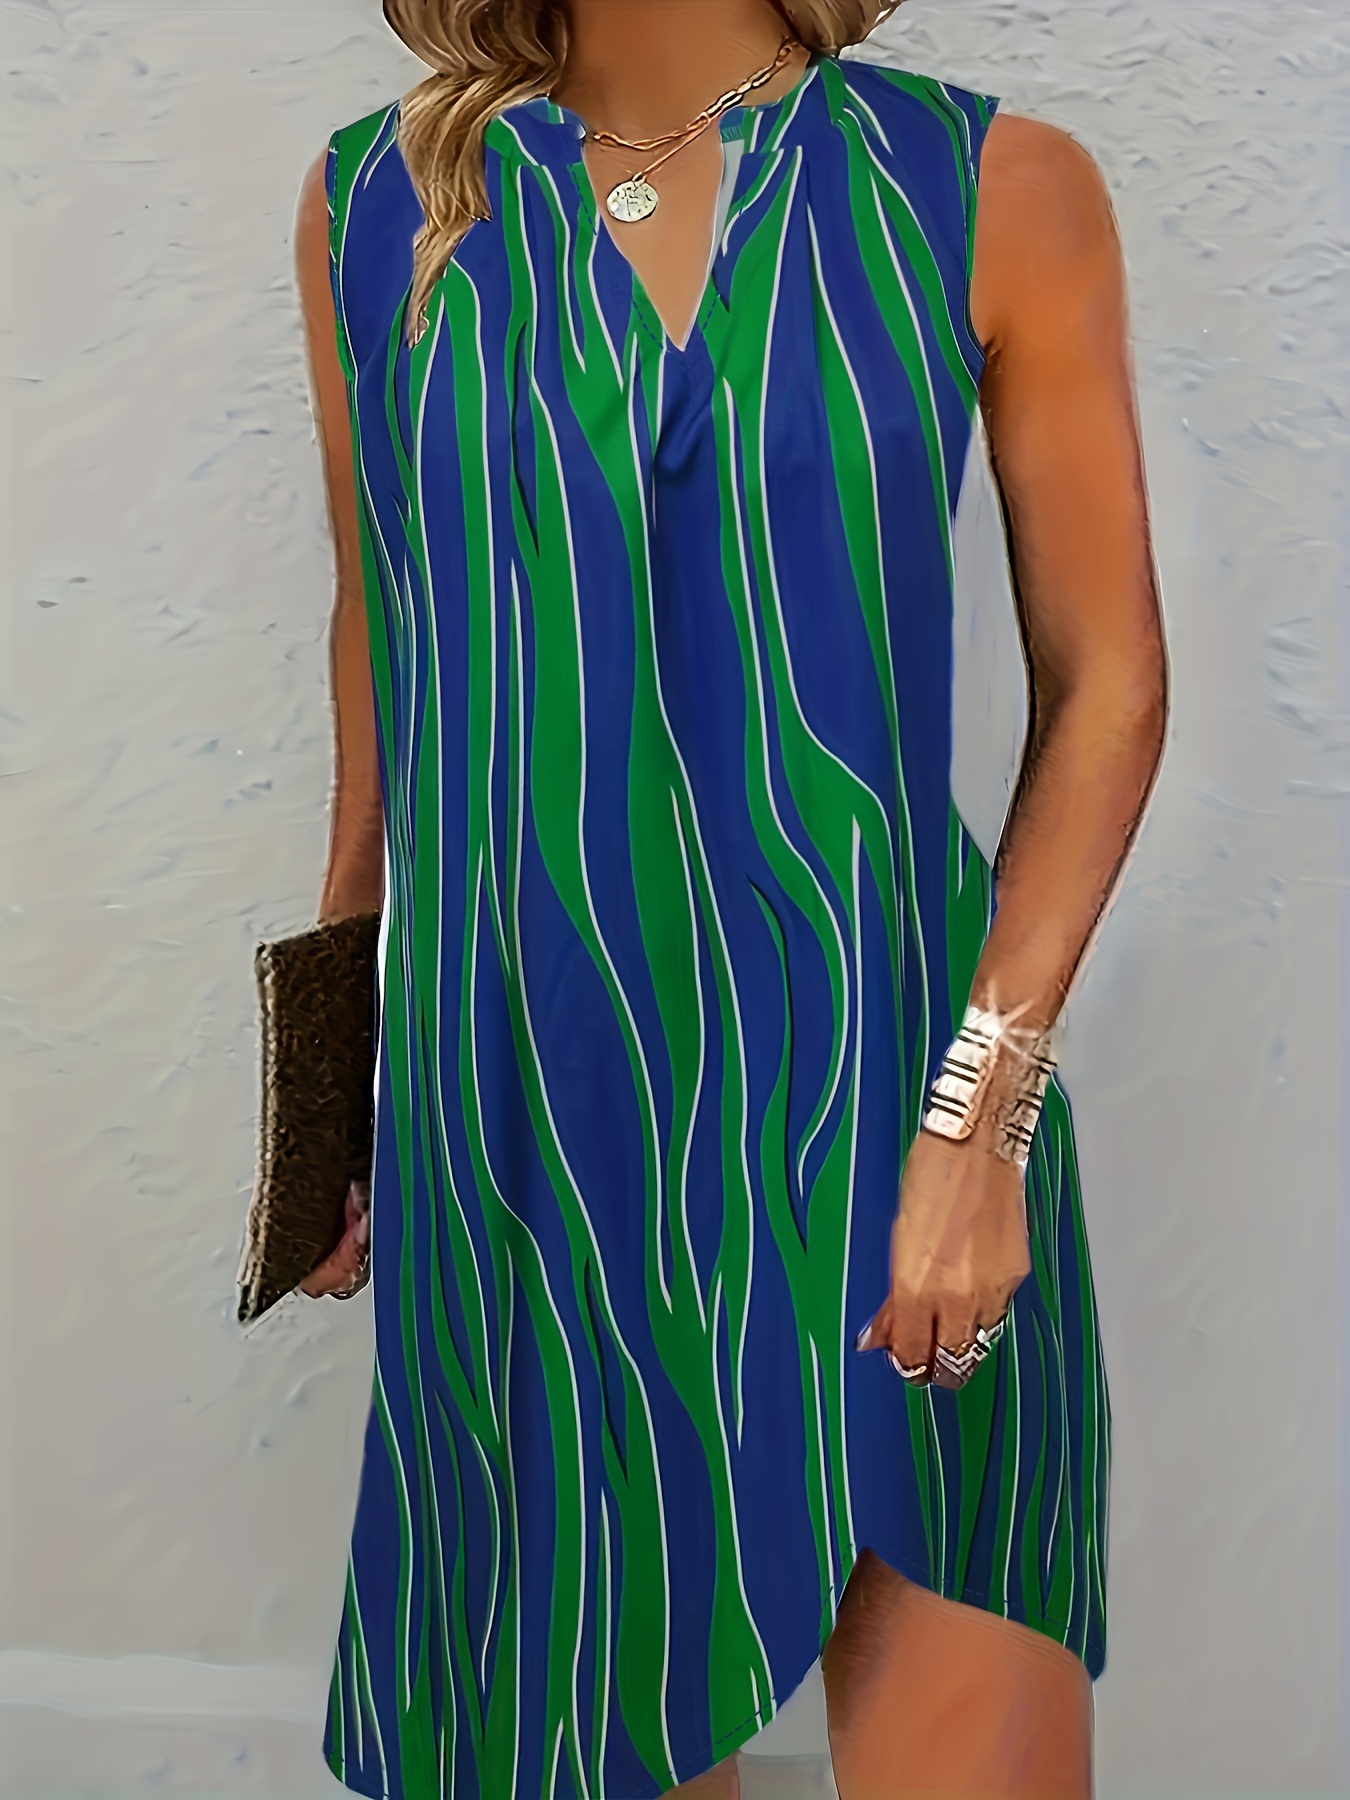 abstract ripple print dress casual v neck sleeveless dress womens clothing details 15